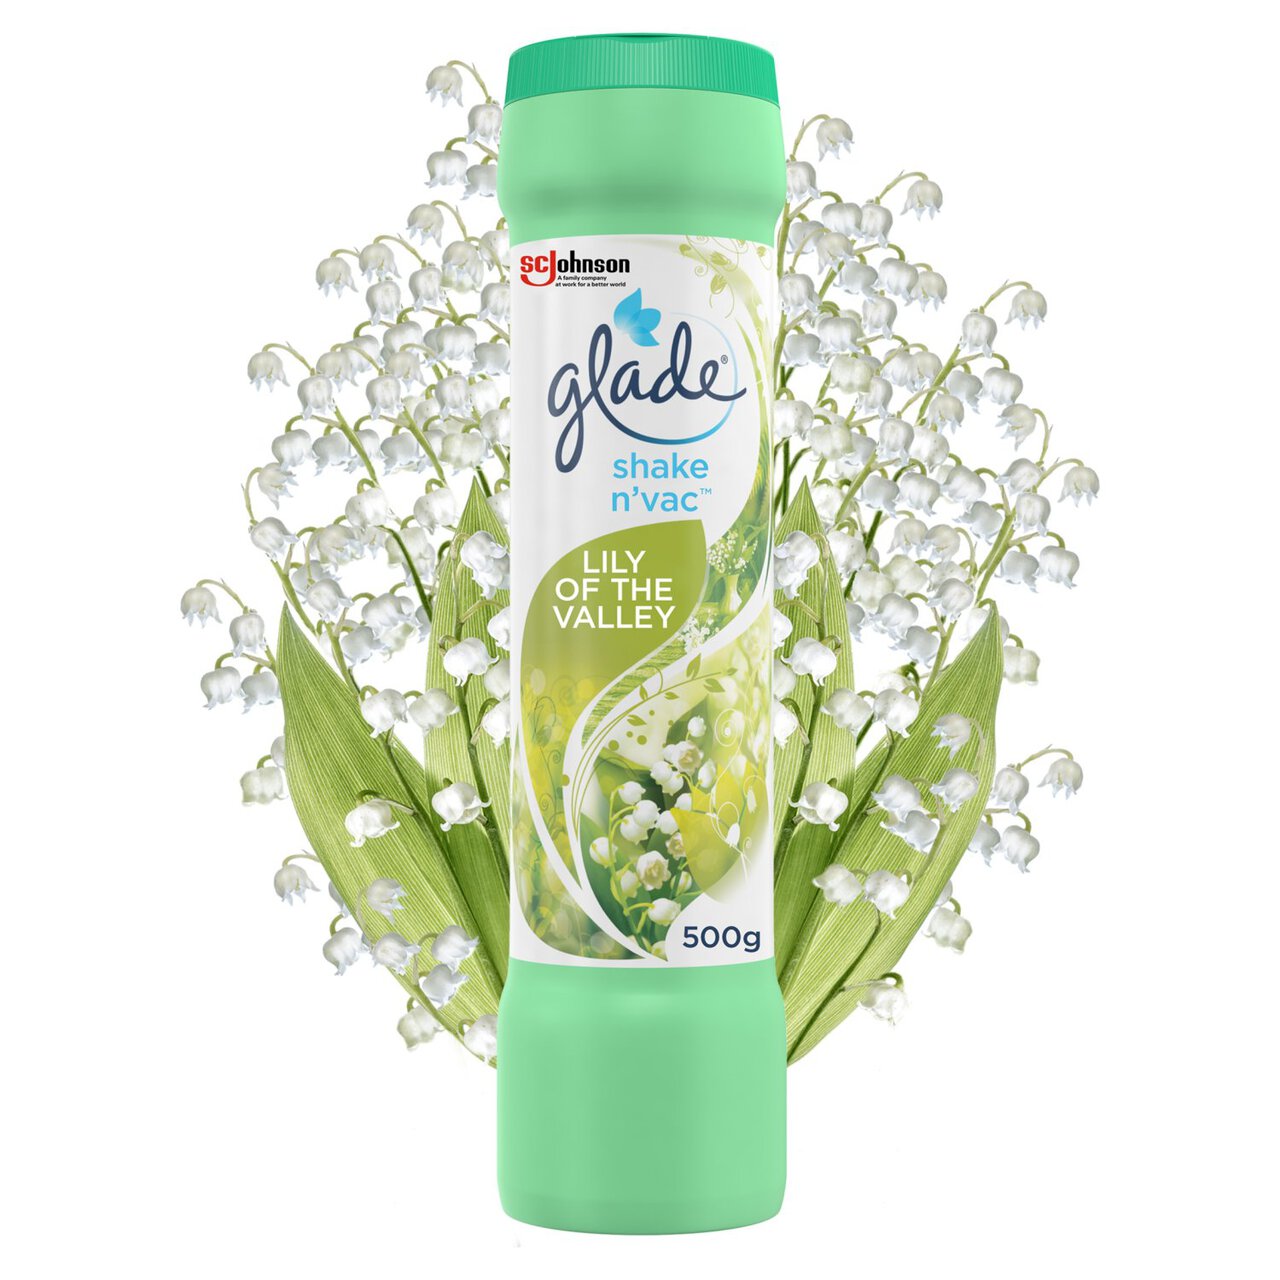 Glade Shake 'n Vac Carpet Freshener Lily of the Valley 500g